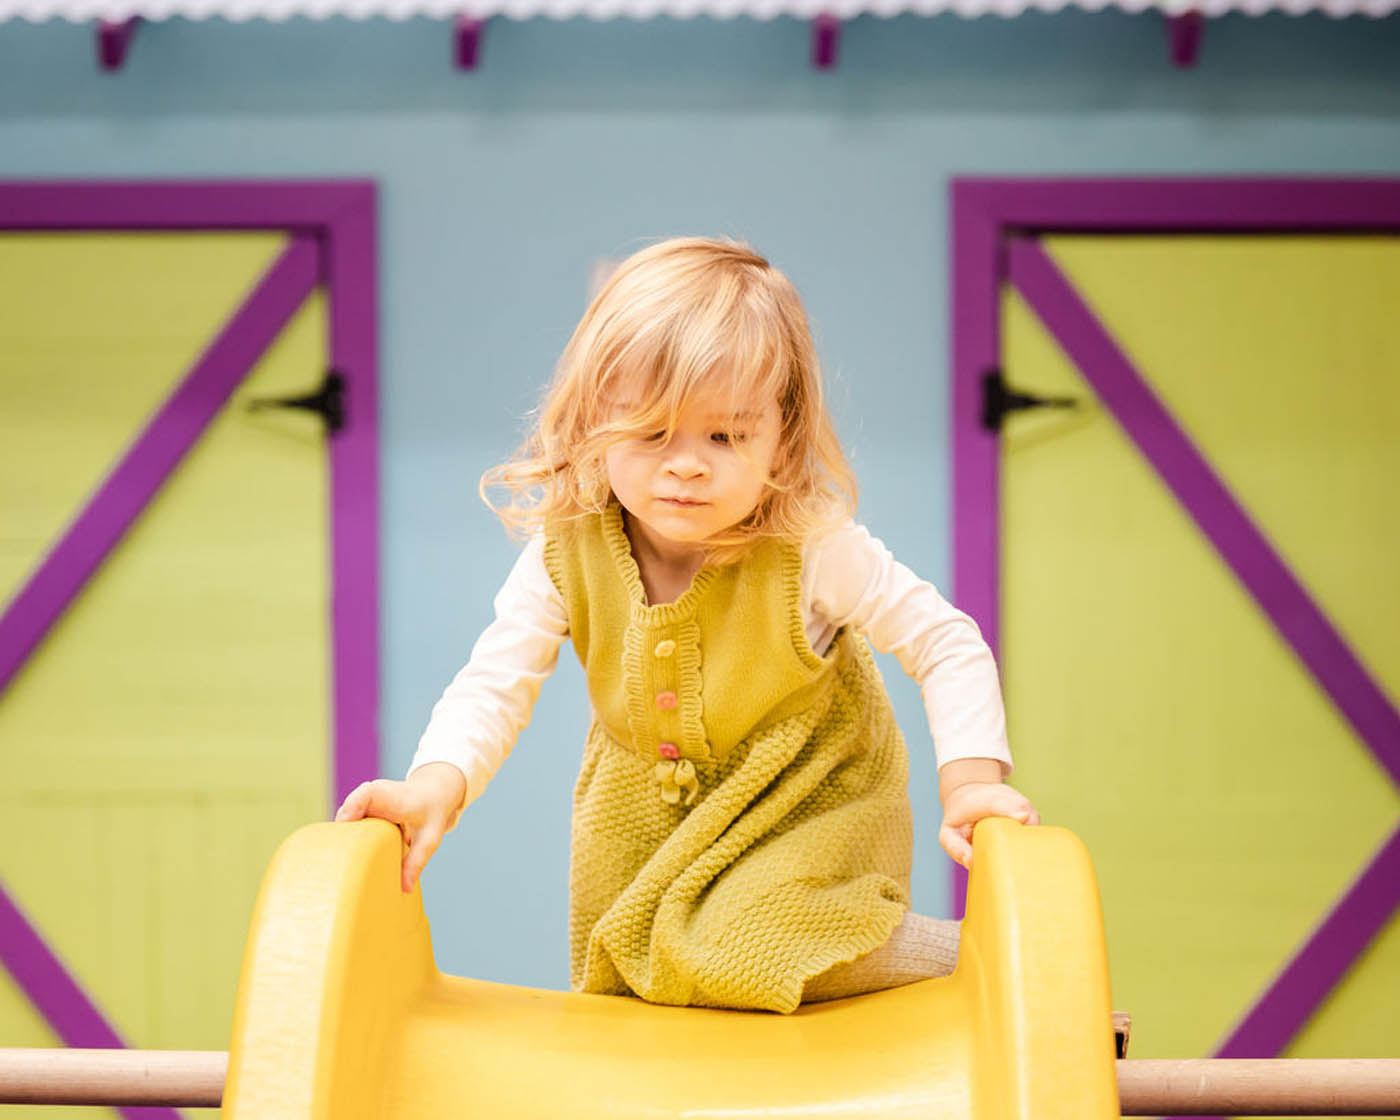 A girl climbing up a yellow slide enjoying open play in Raleigh, NC.